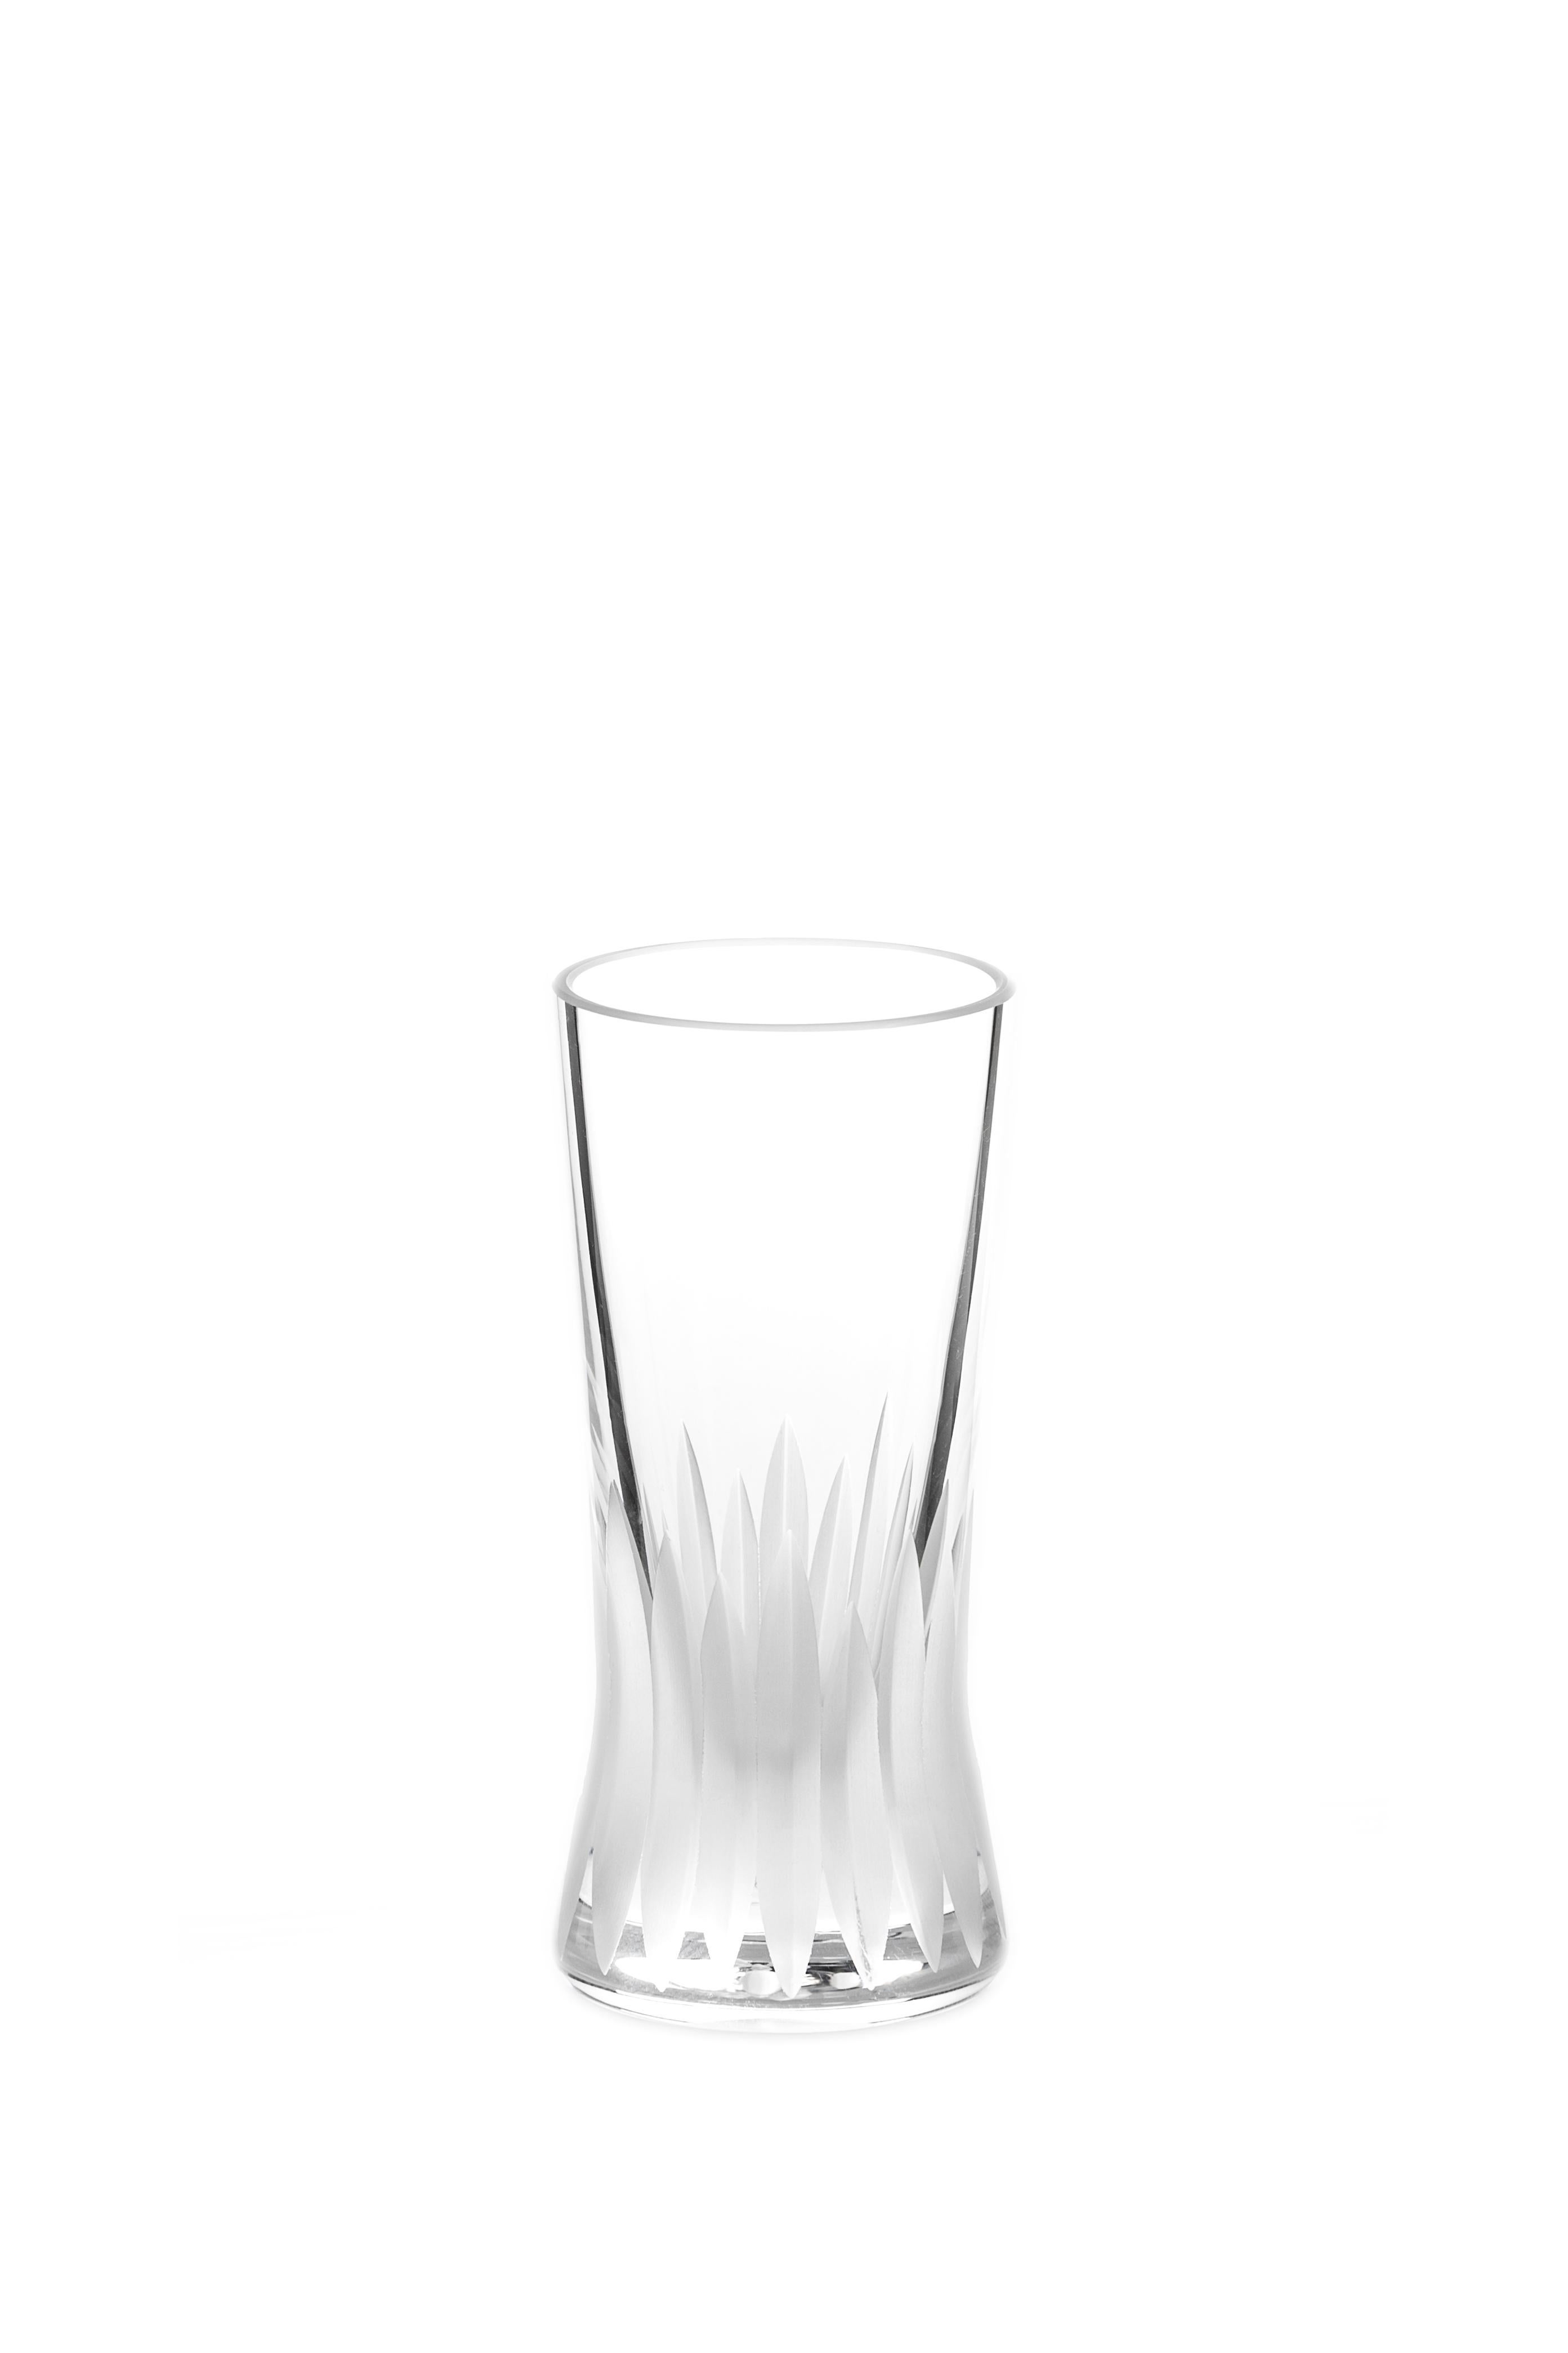 Cut Glass Martino Gamper Handmade Irish Crystal Shot Glass 'Cuttings' Series Set of 4 For Sale